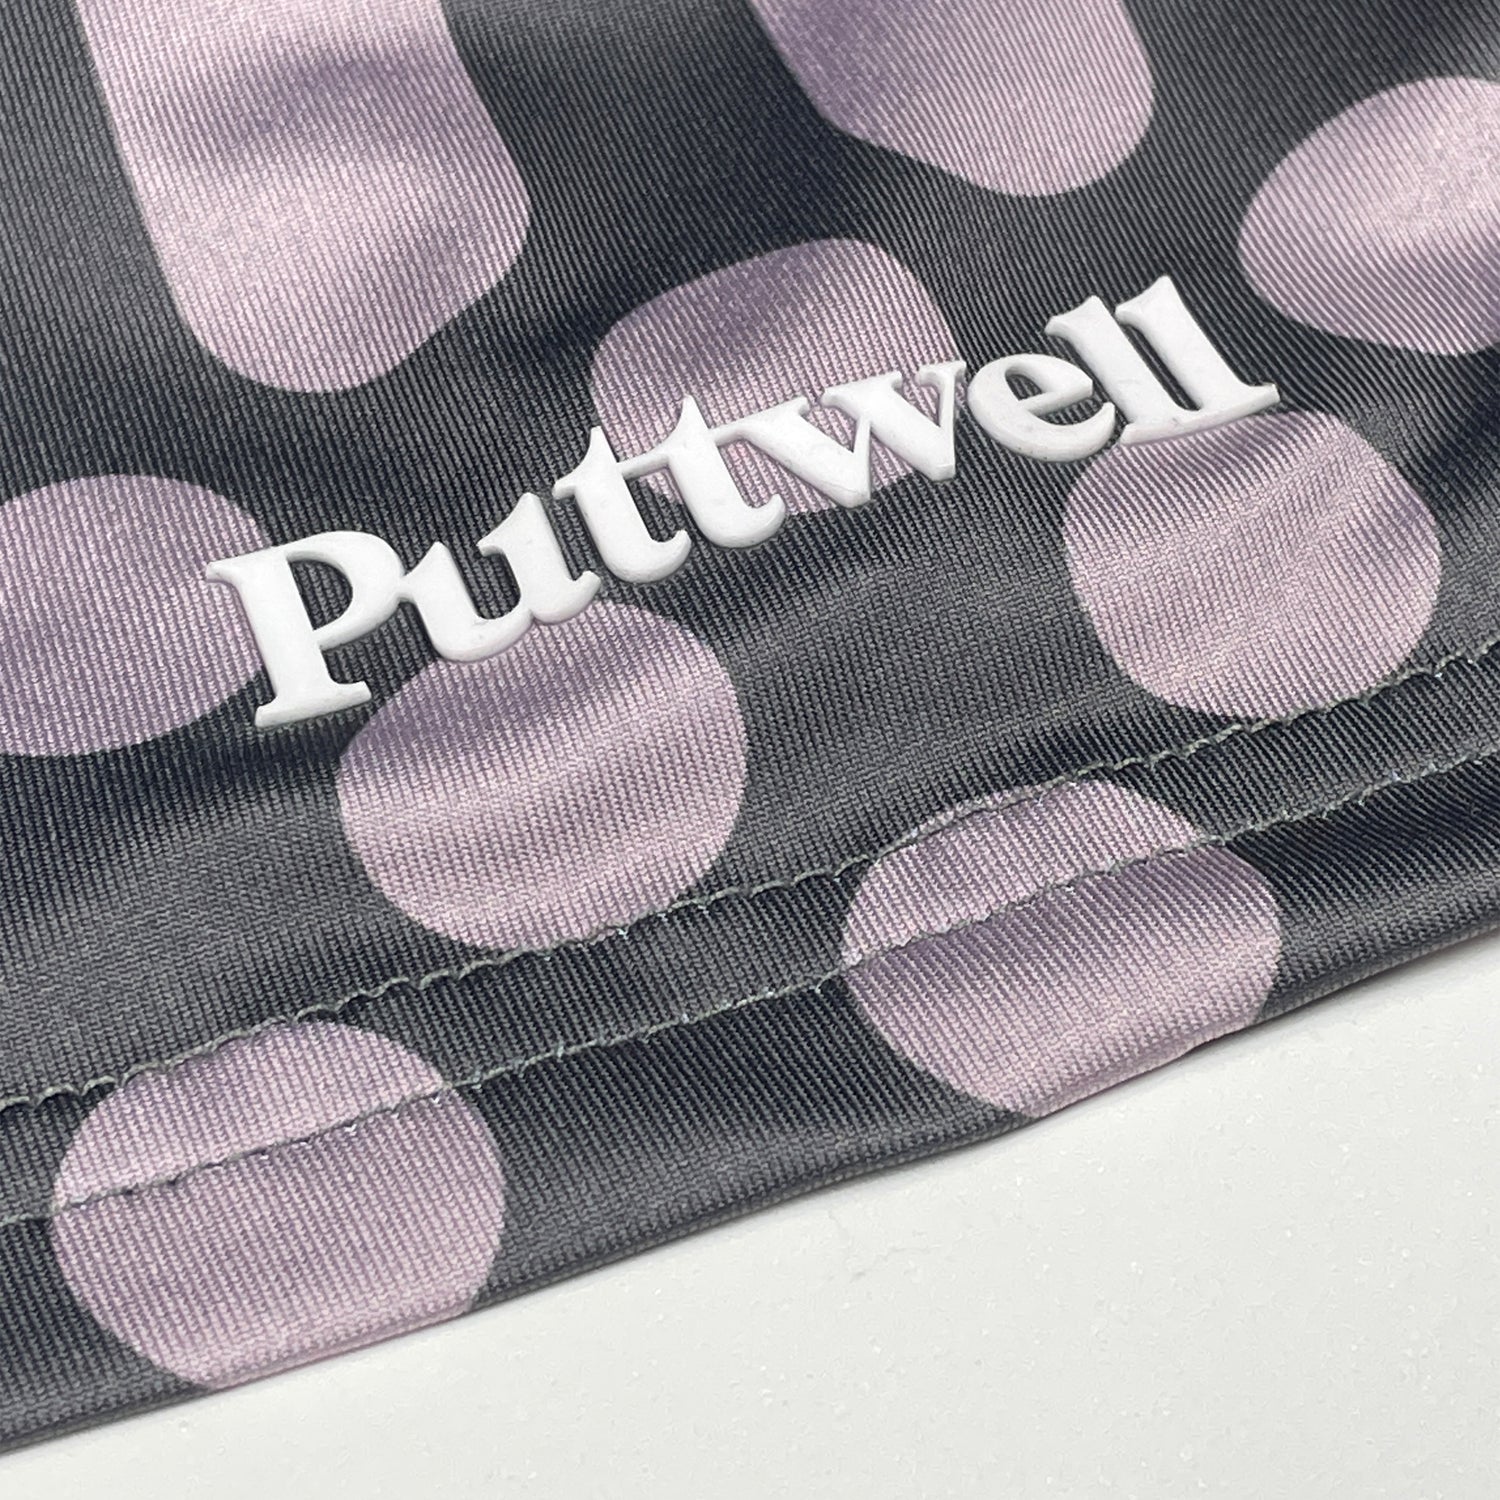 Puttwell Patchwork Polo - Blue Medium